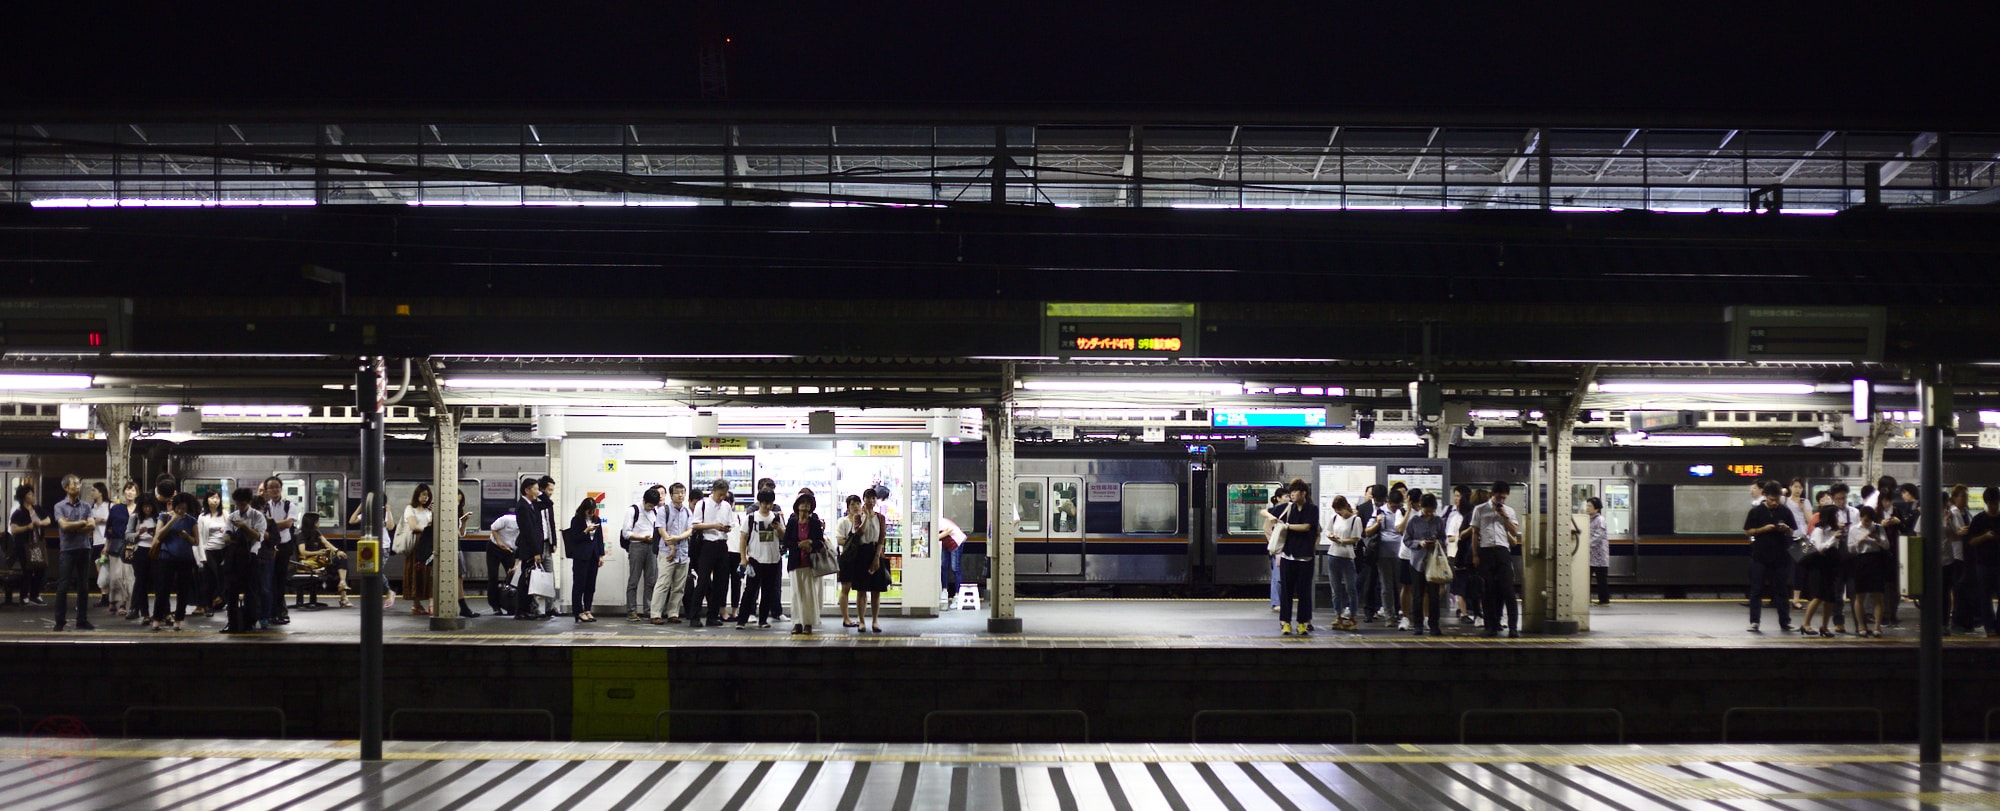 Kyoto Station, 2018